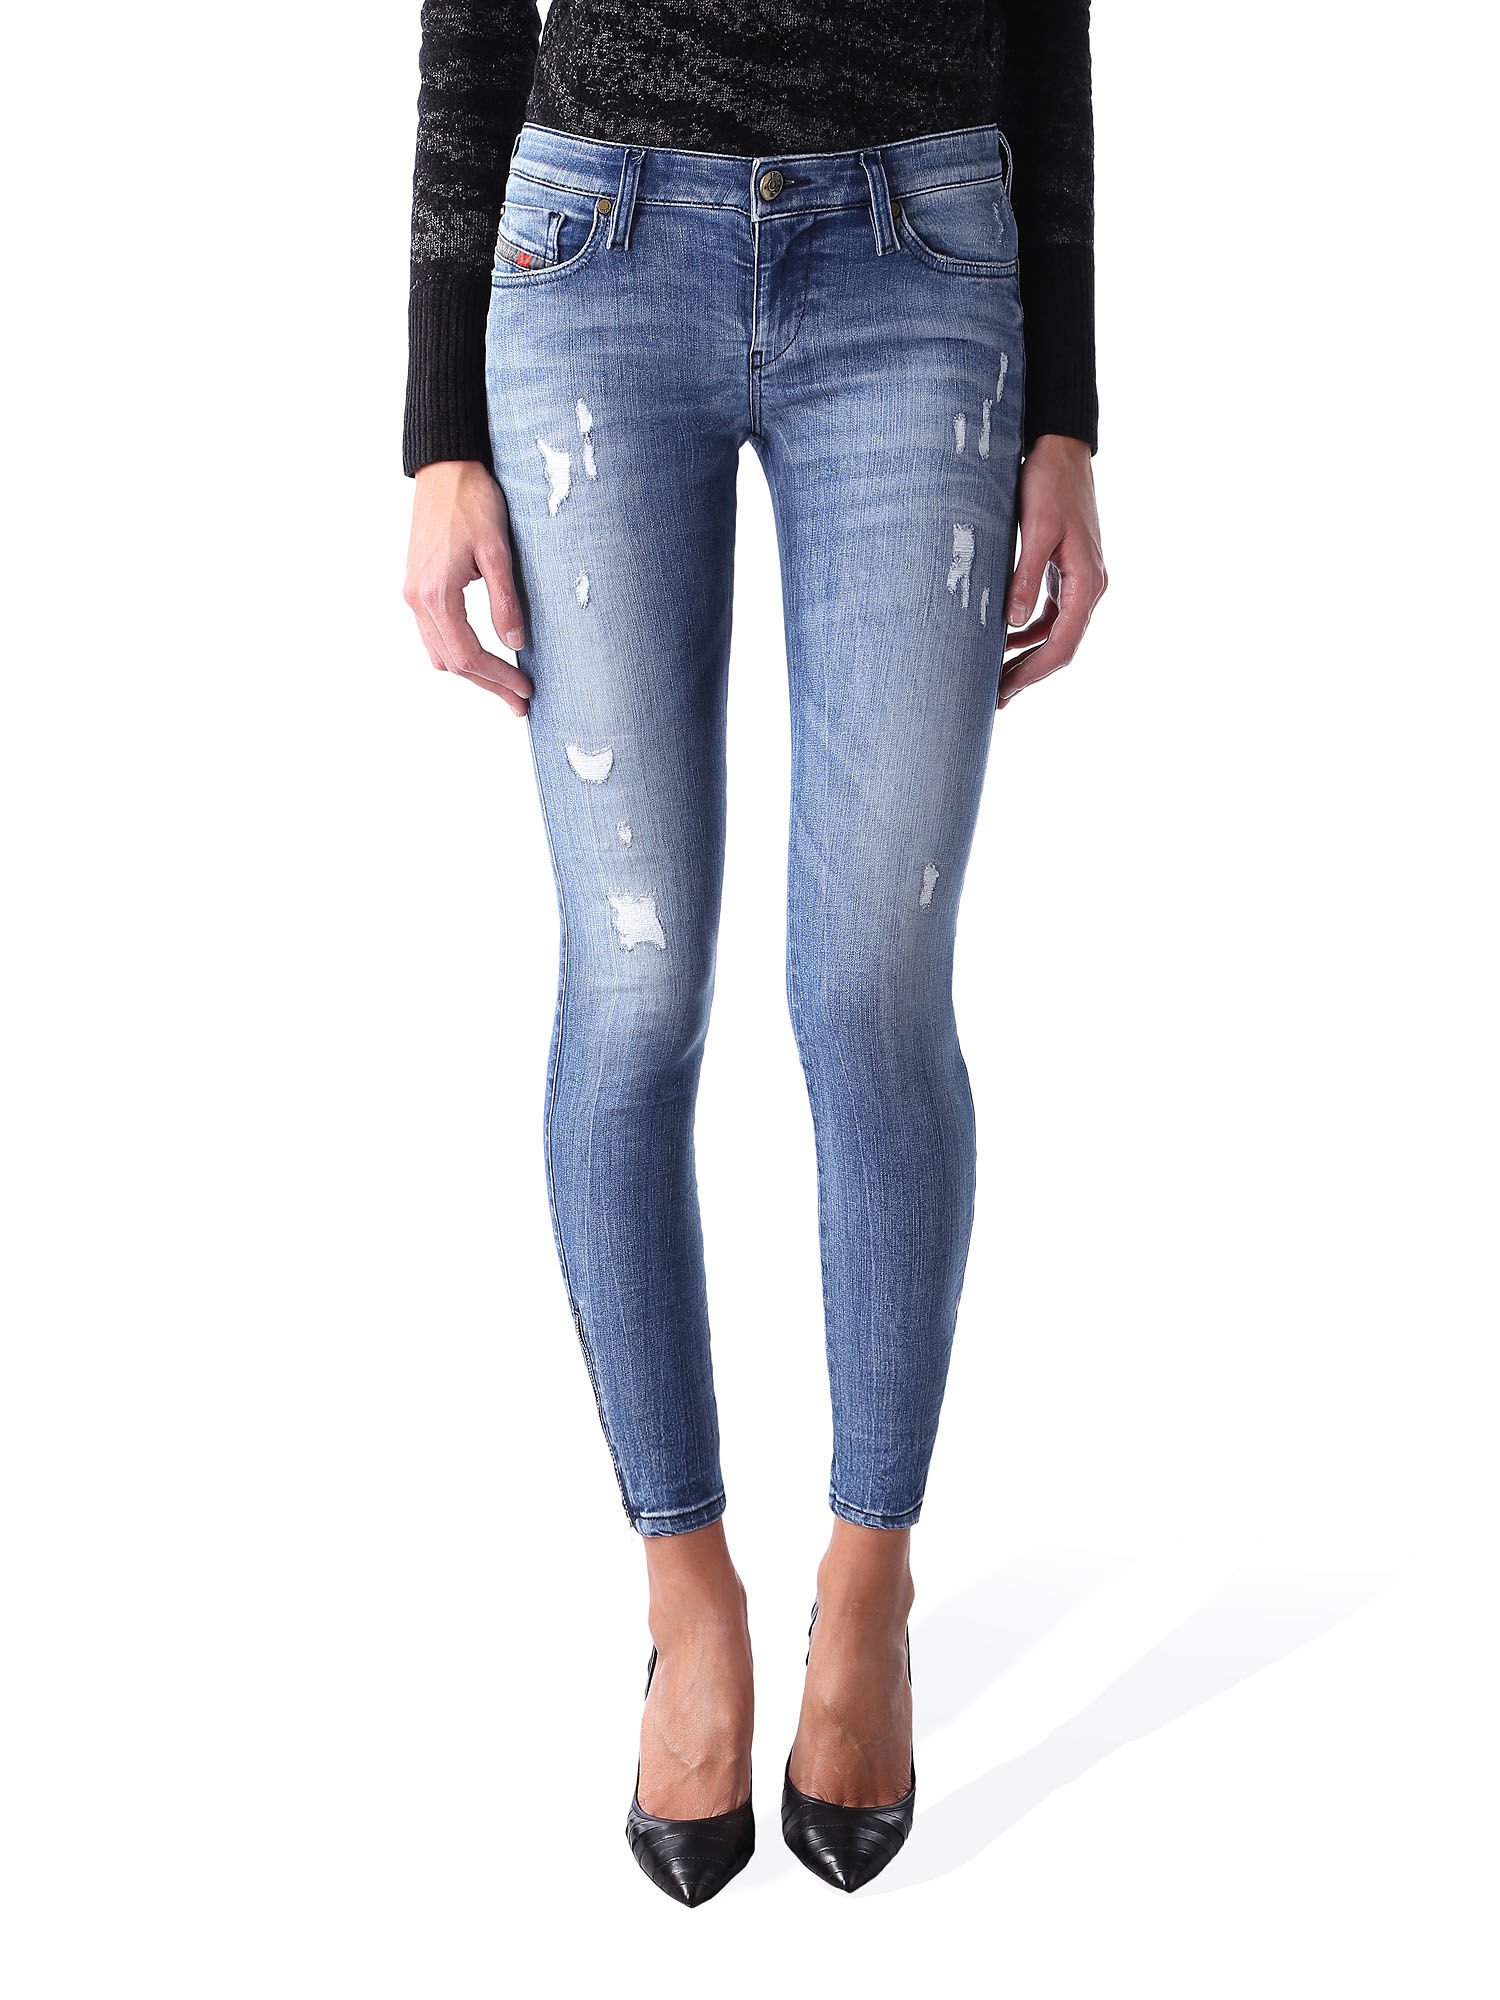 mens jeans fashion 2019